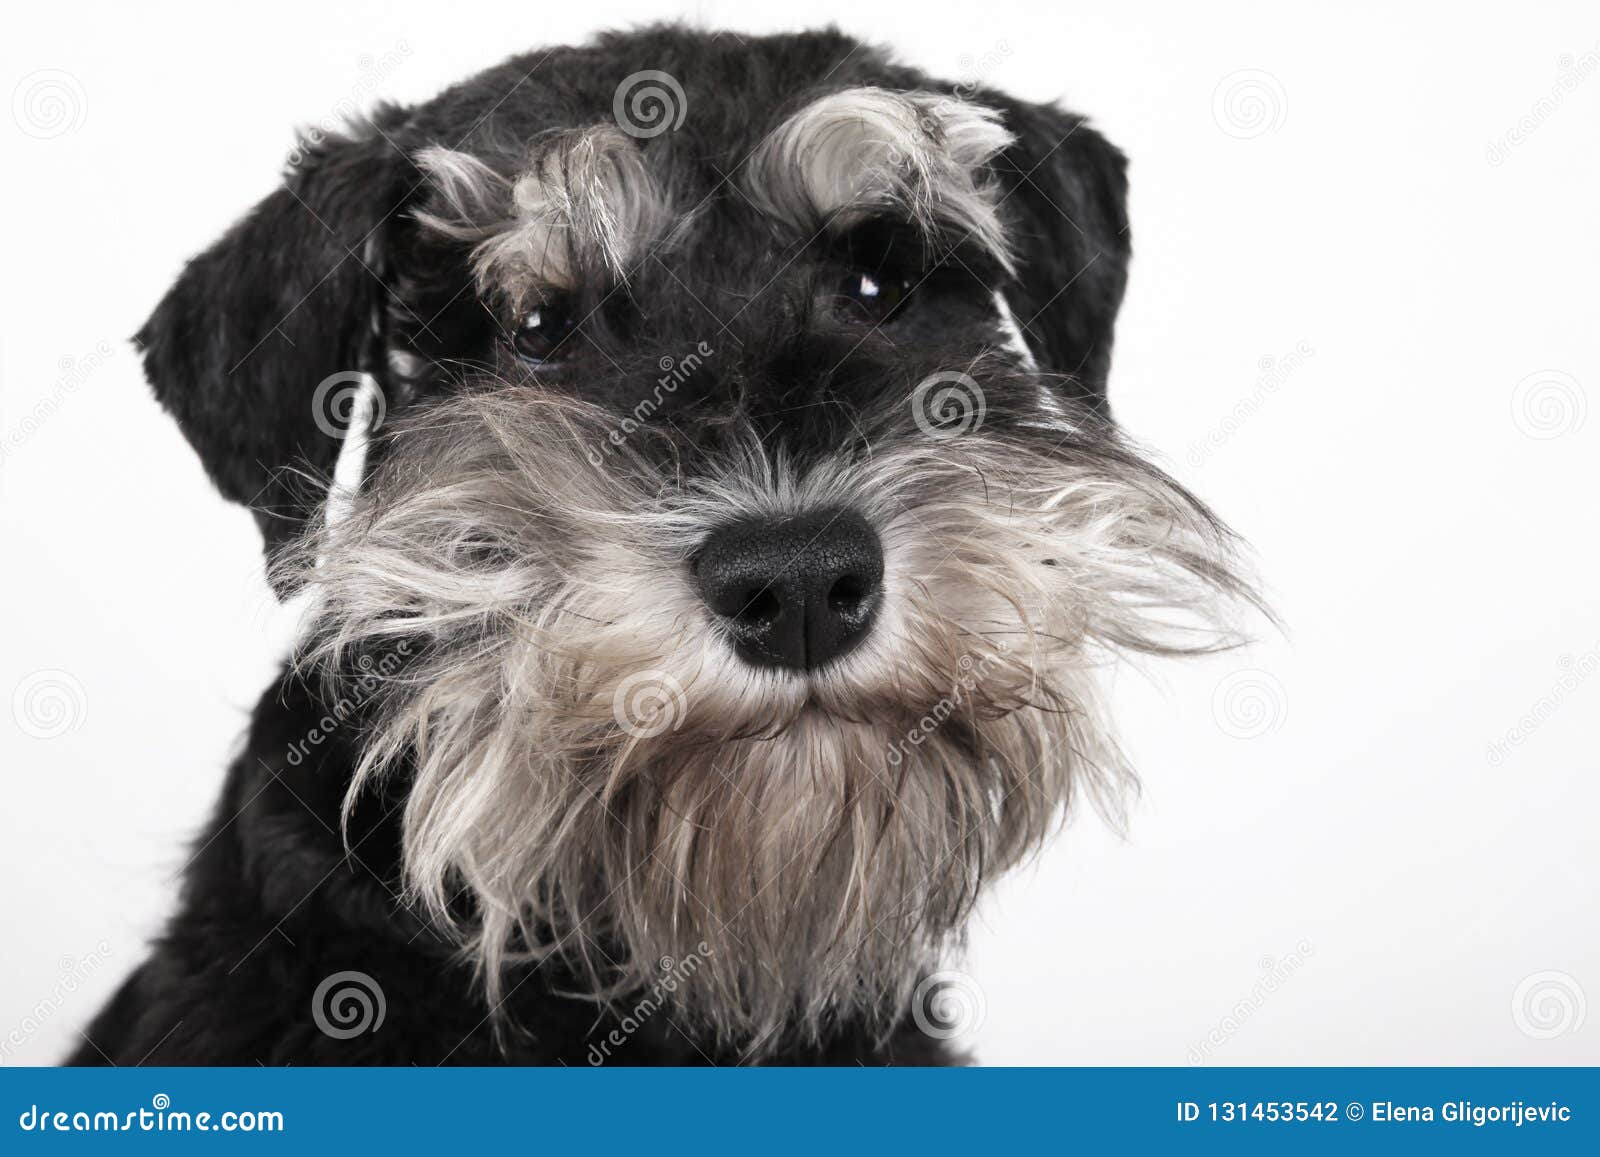 Miniature Schnauzer Puppy Dog On White Background Stock Photo Image Of Beauty Outdoors 131453542